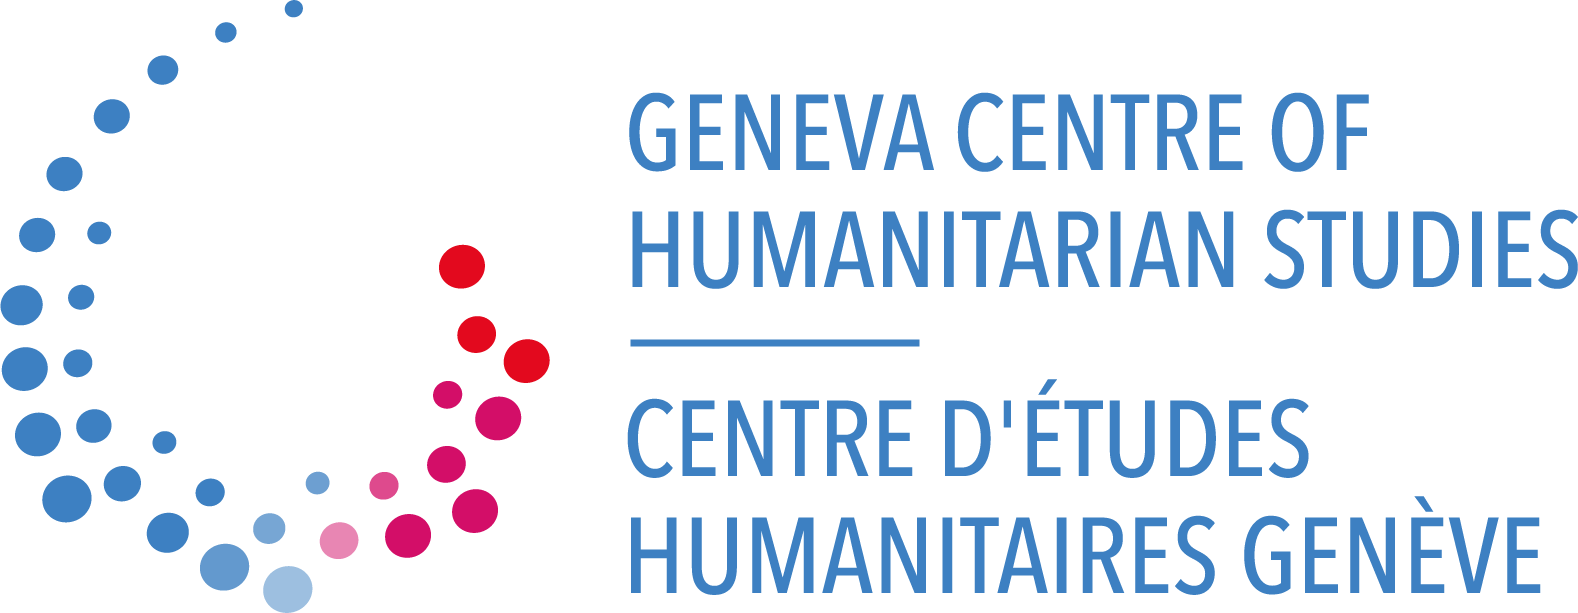 Geneva Centre of Humanitarian Studies-master logo version.png